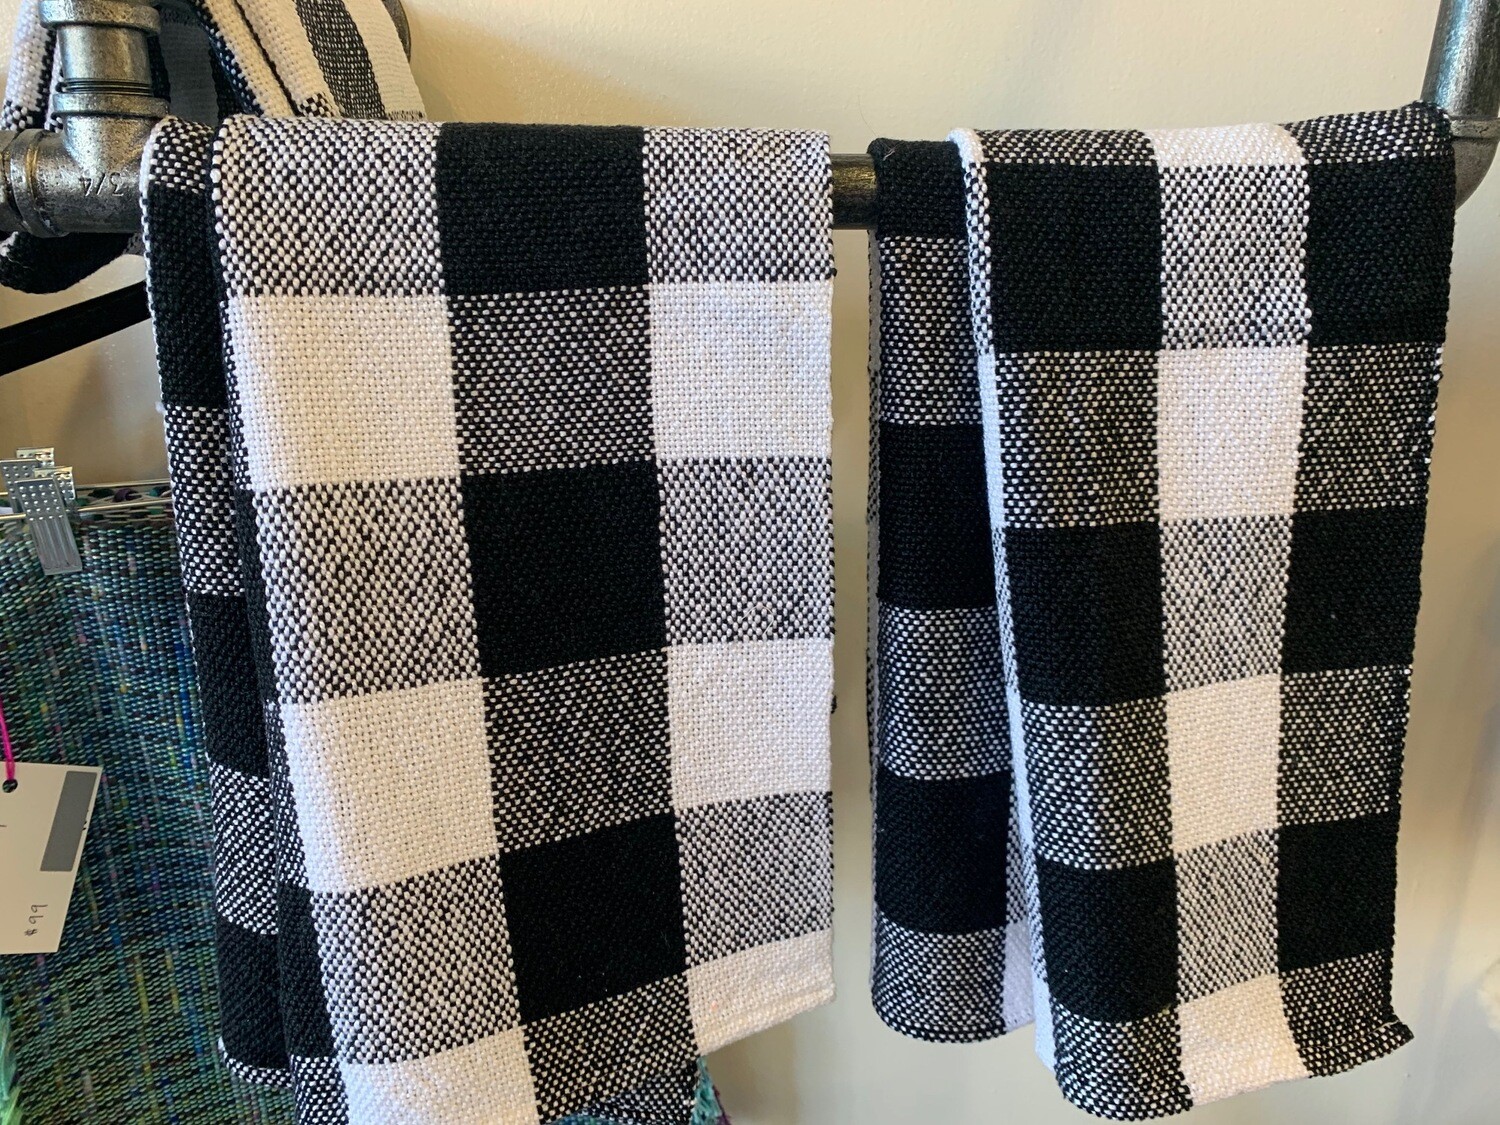 Buffalo Plaid dish towels